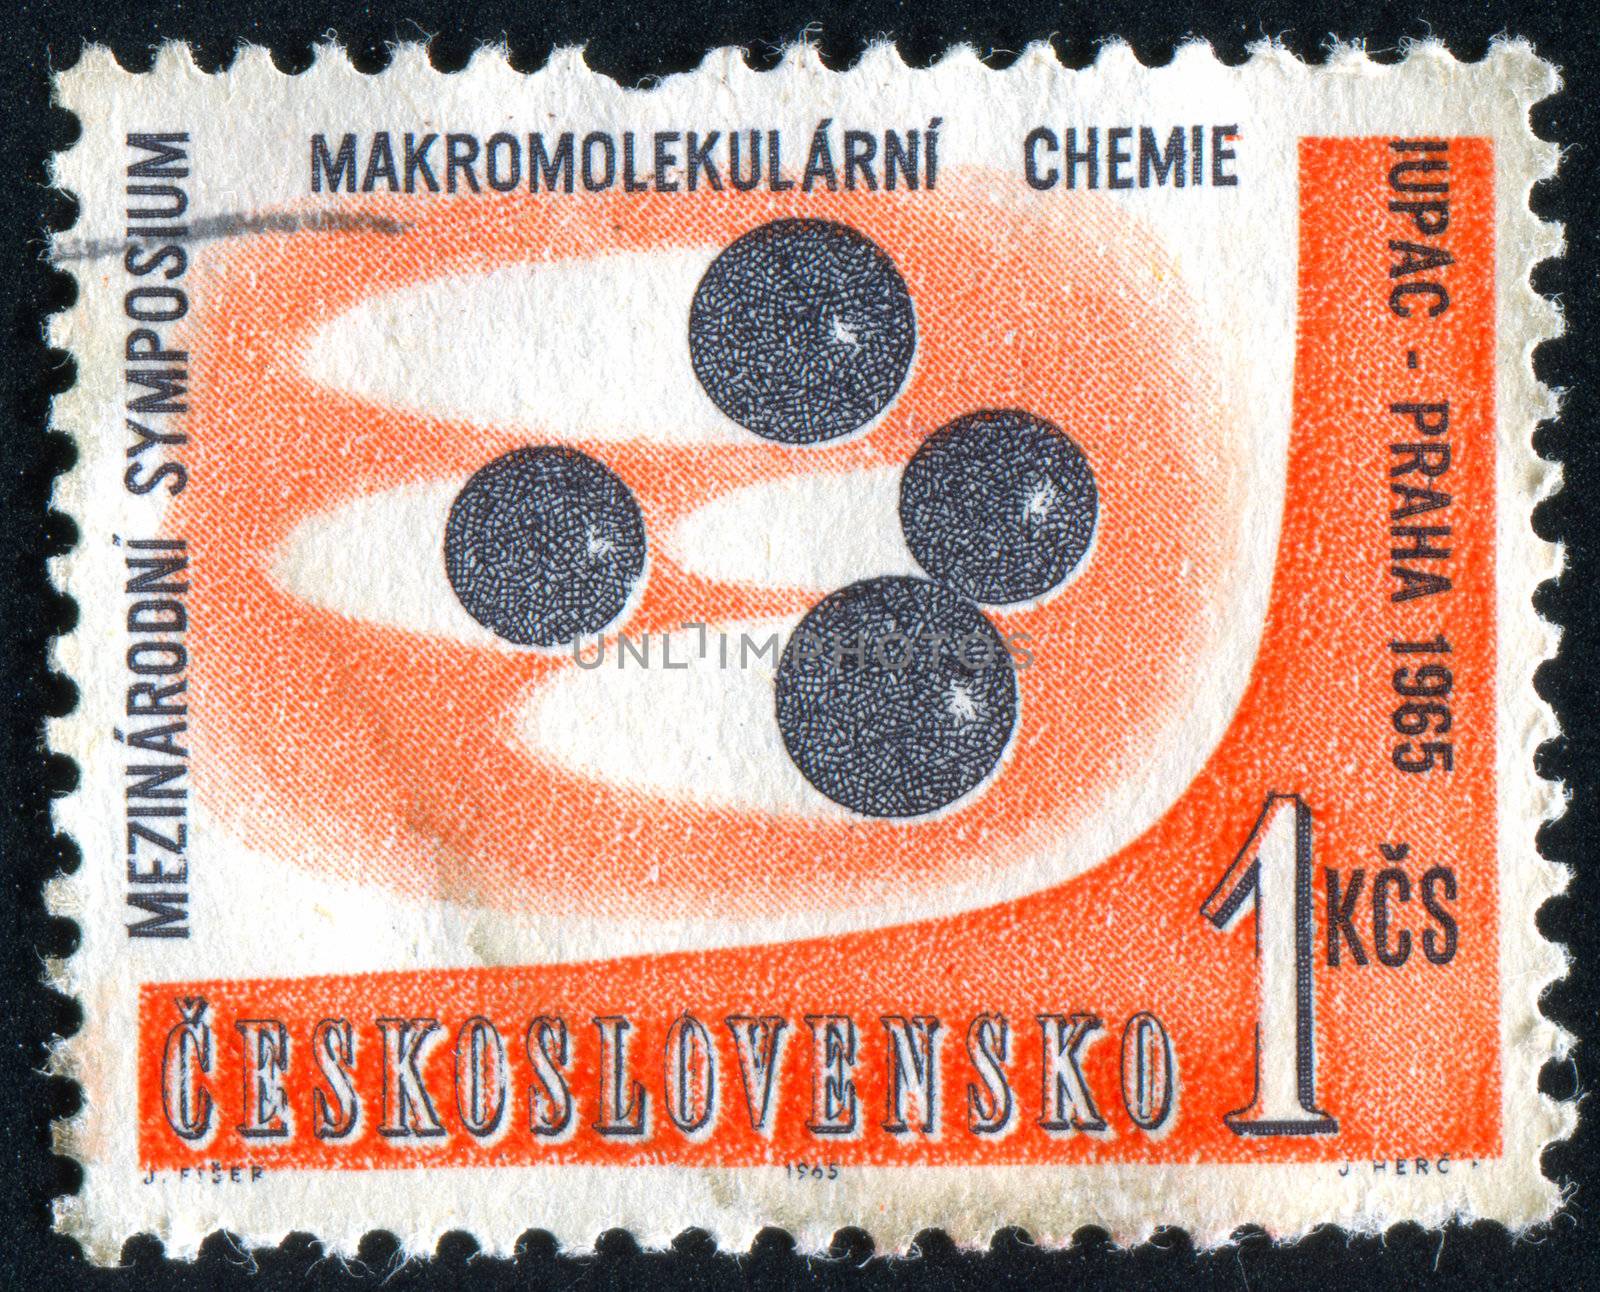 CZECHOSLOVAKIA - CIRCA 1965: stamp printed by Czechoslovakia, shows Macromolecular Symposium Emblem, circa 1965